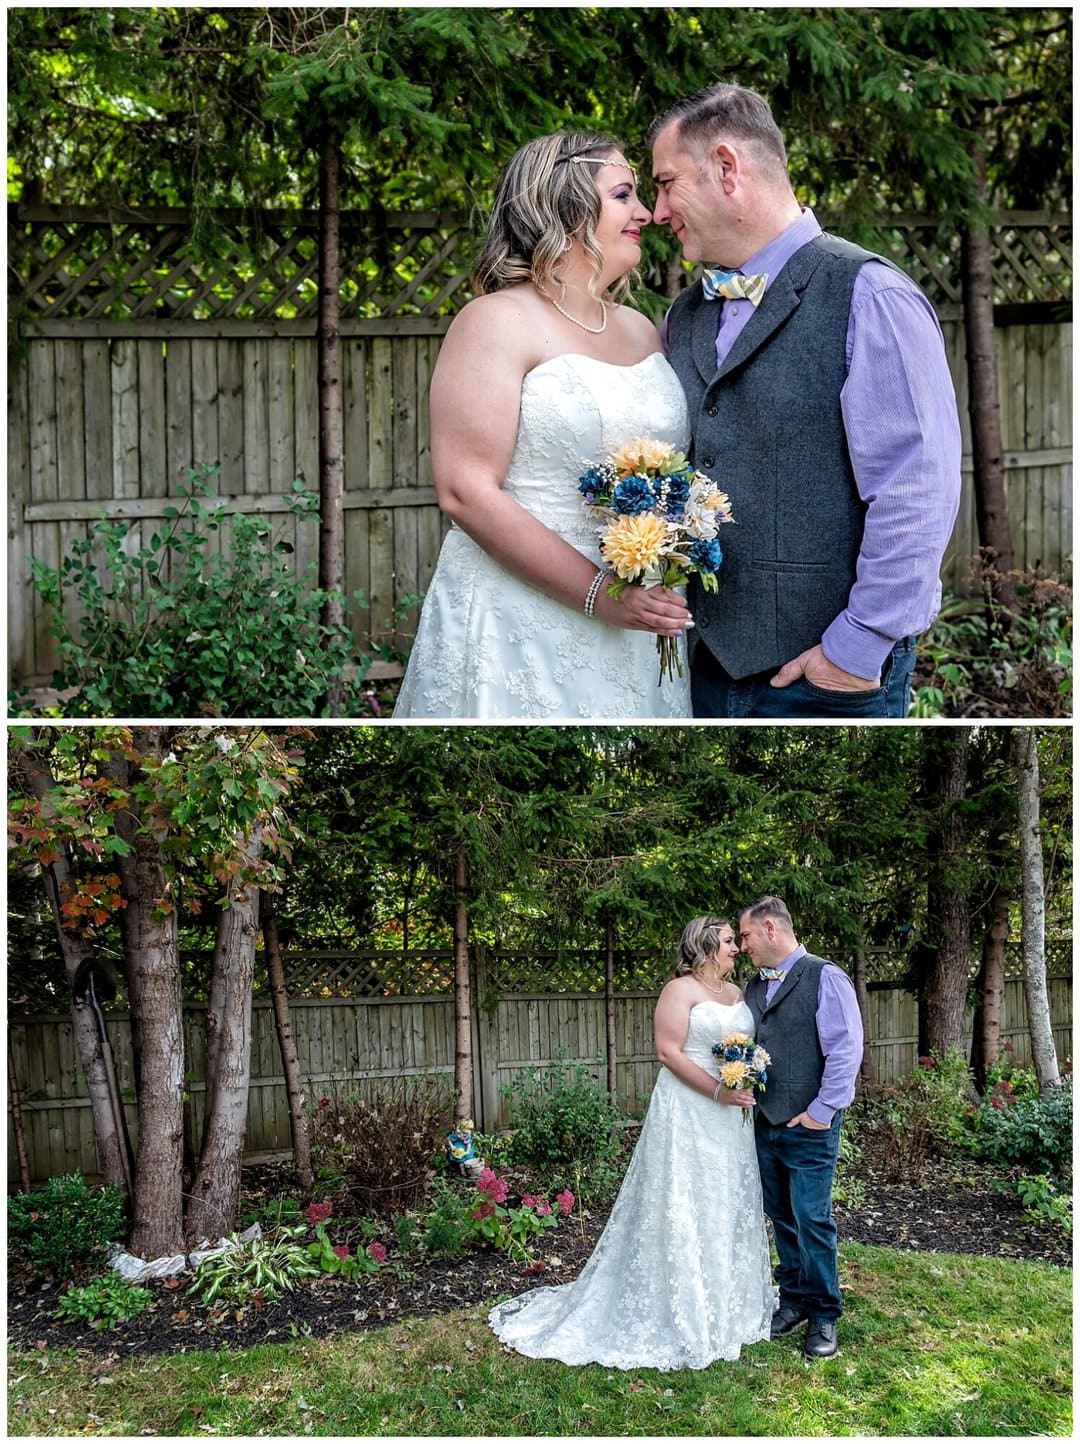 The bride and groom pose in a beautiful garden for their wedding photos after their elopement garden backyard wedding in Dartmouth NS